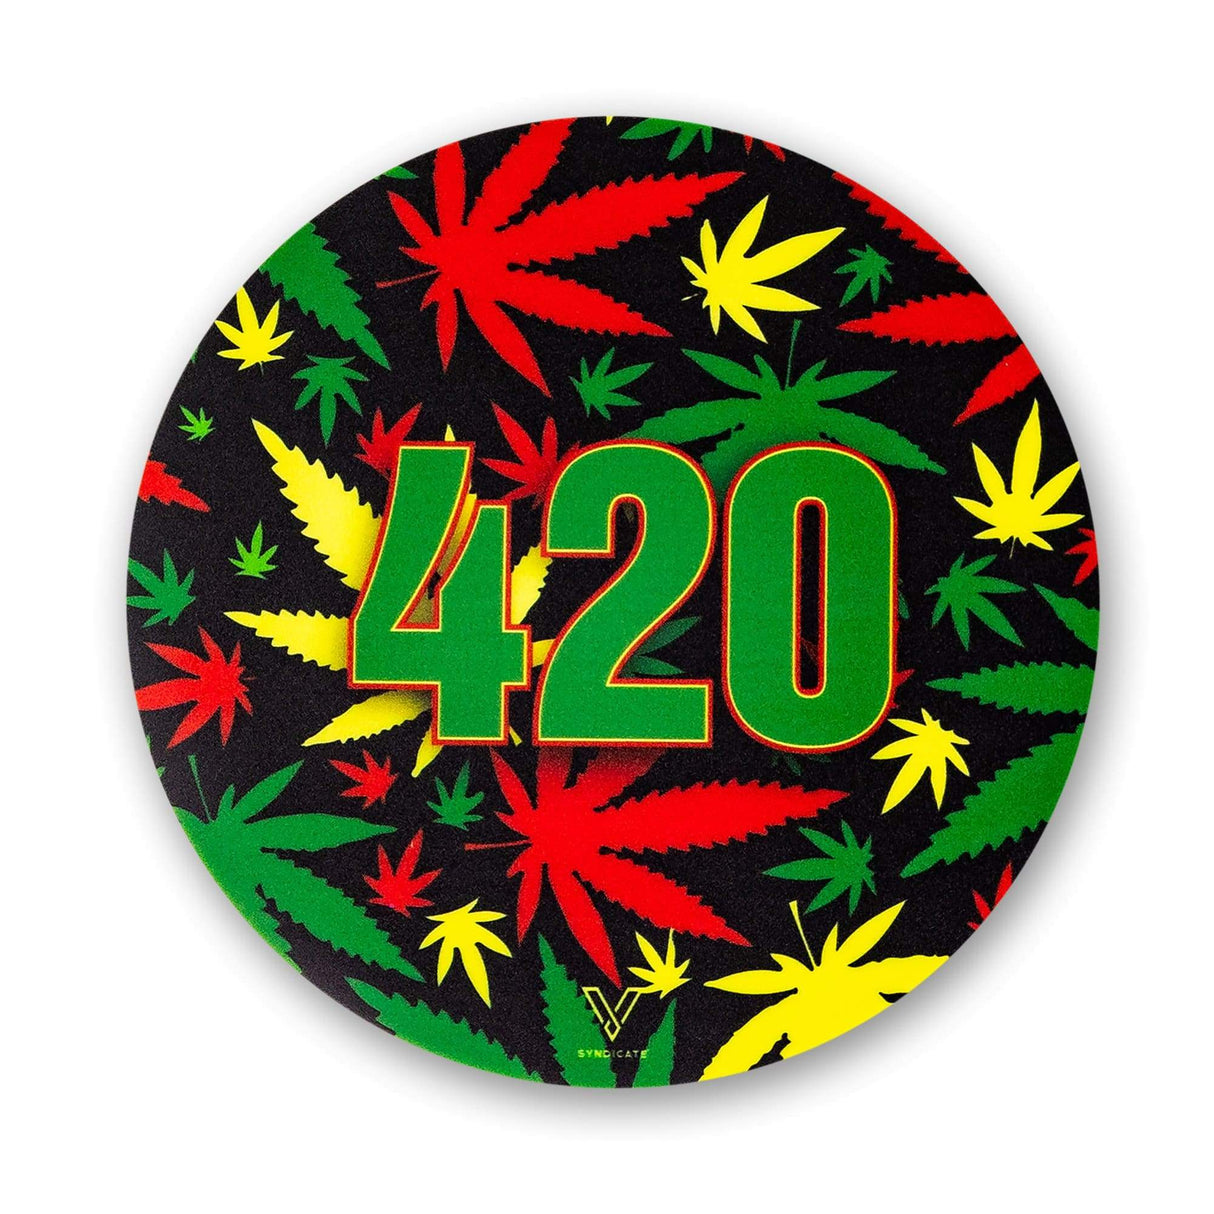 V Syndicate 420 Rasta Slikks with colorful leaf design, medium-sized silicone dab mat